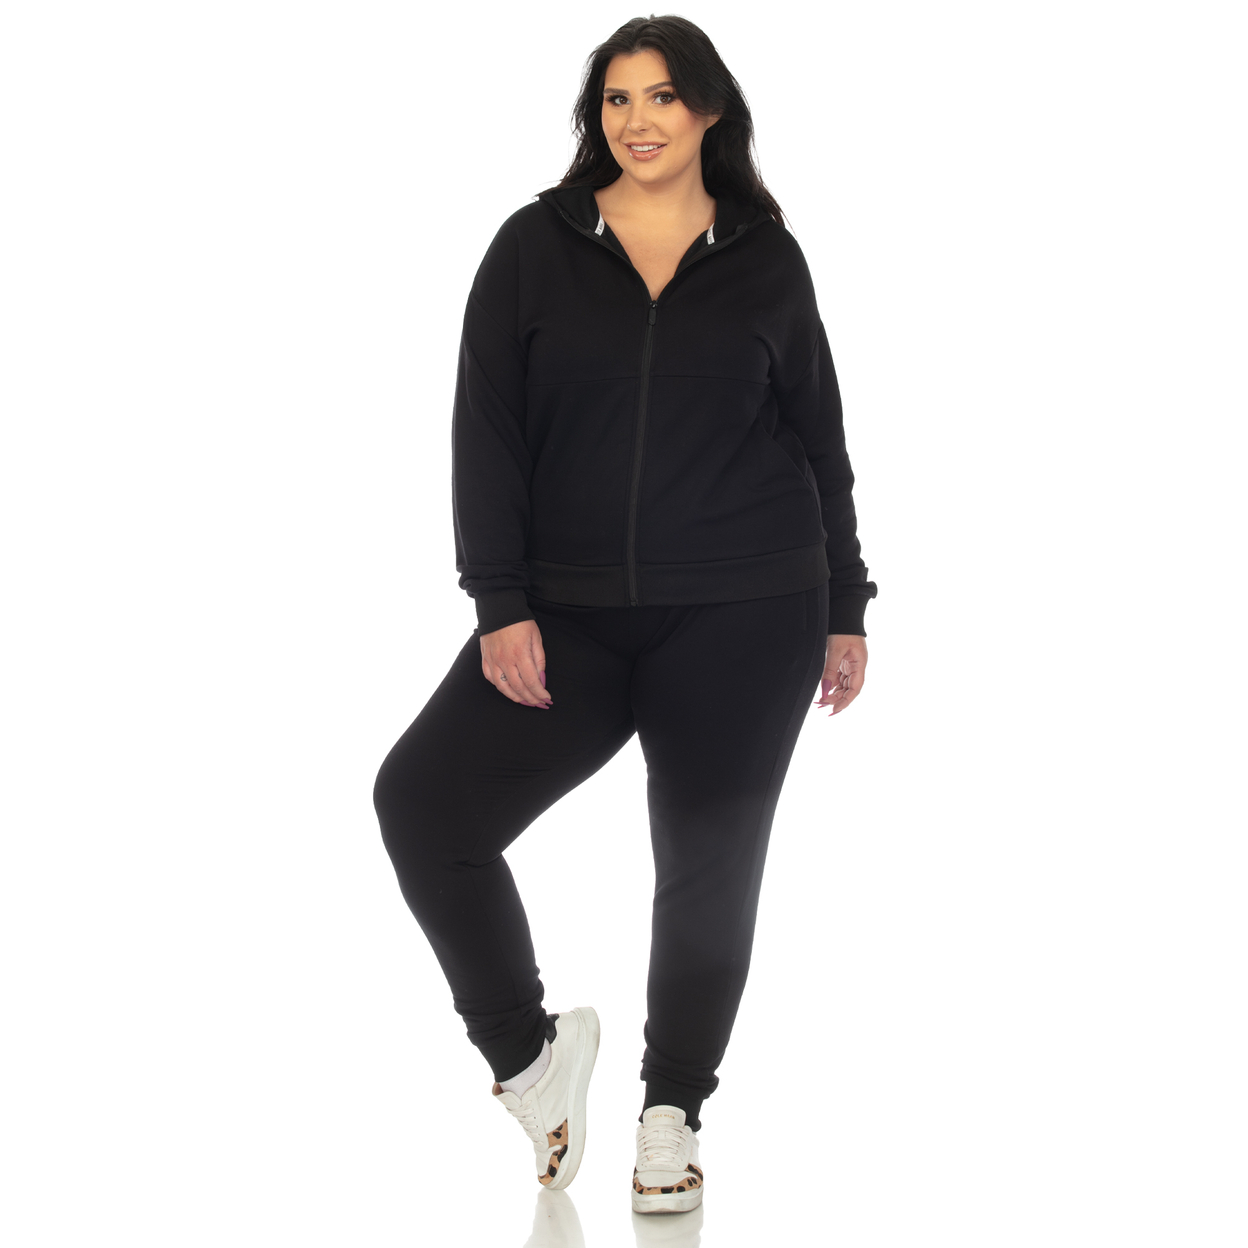 White Mark Women's 2-PC Fleece Sweatsuit Set - Black, 3x